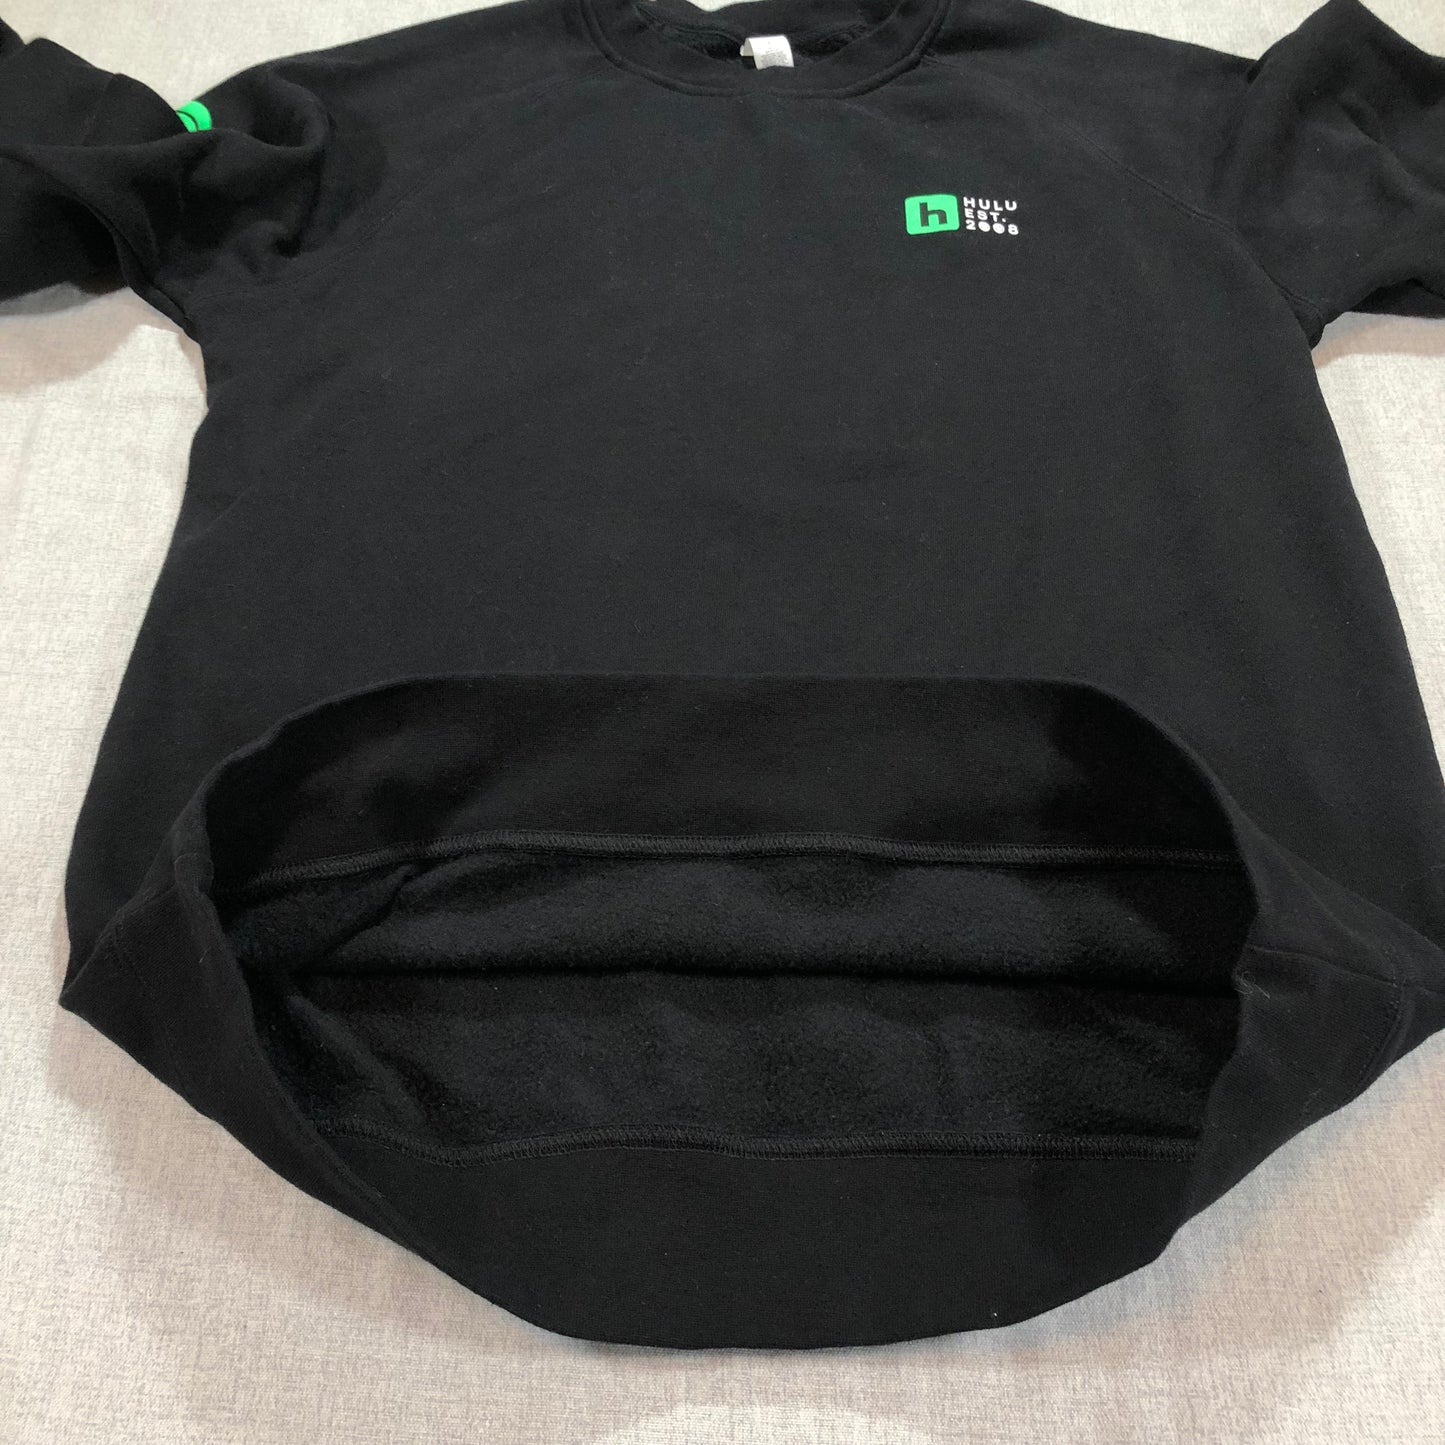 Hulu Sweatshirt Mens Large Black with Green Logo Est 2008 PREOWNED